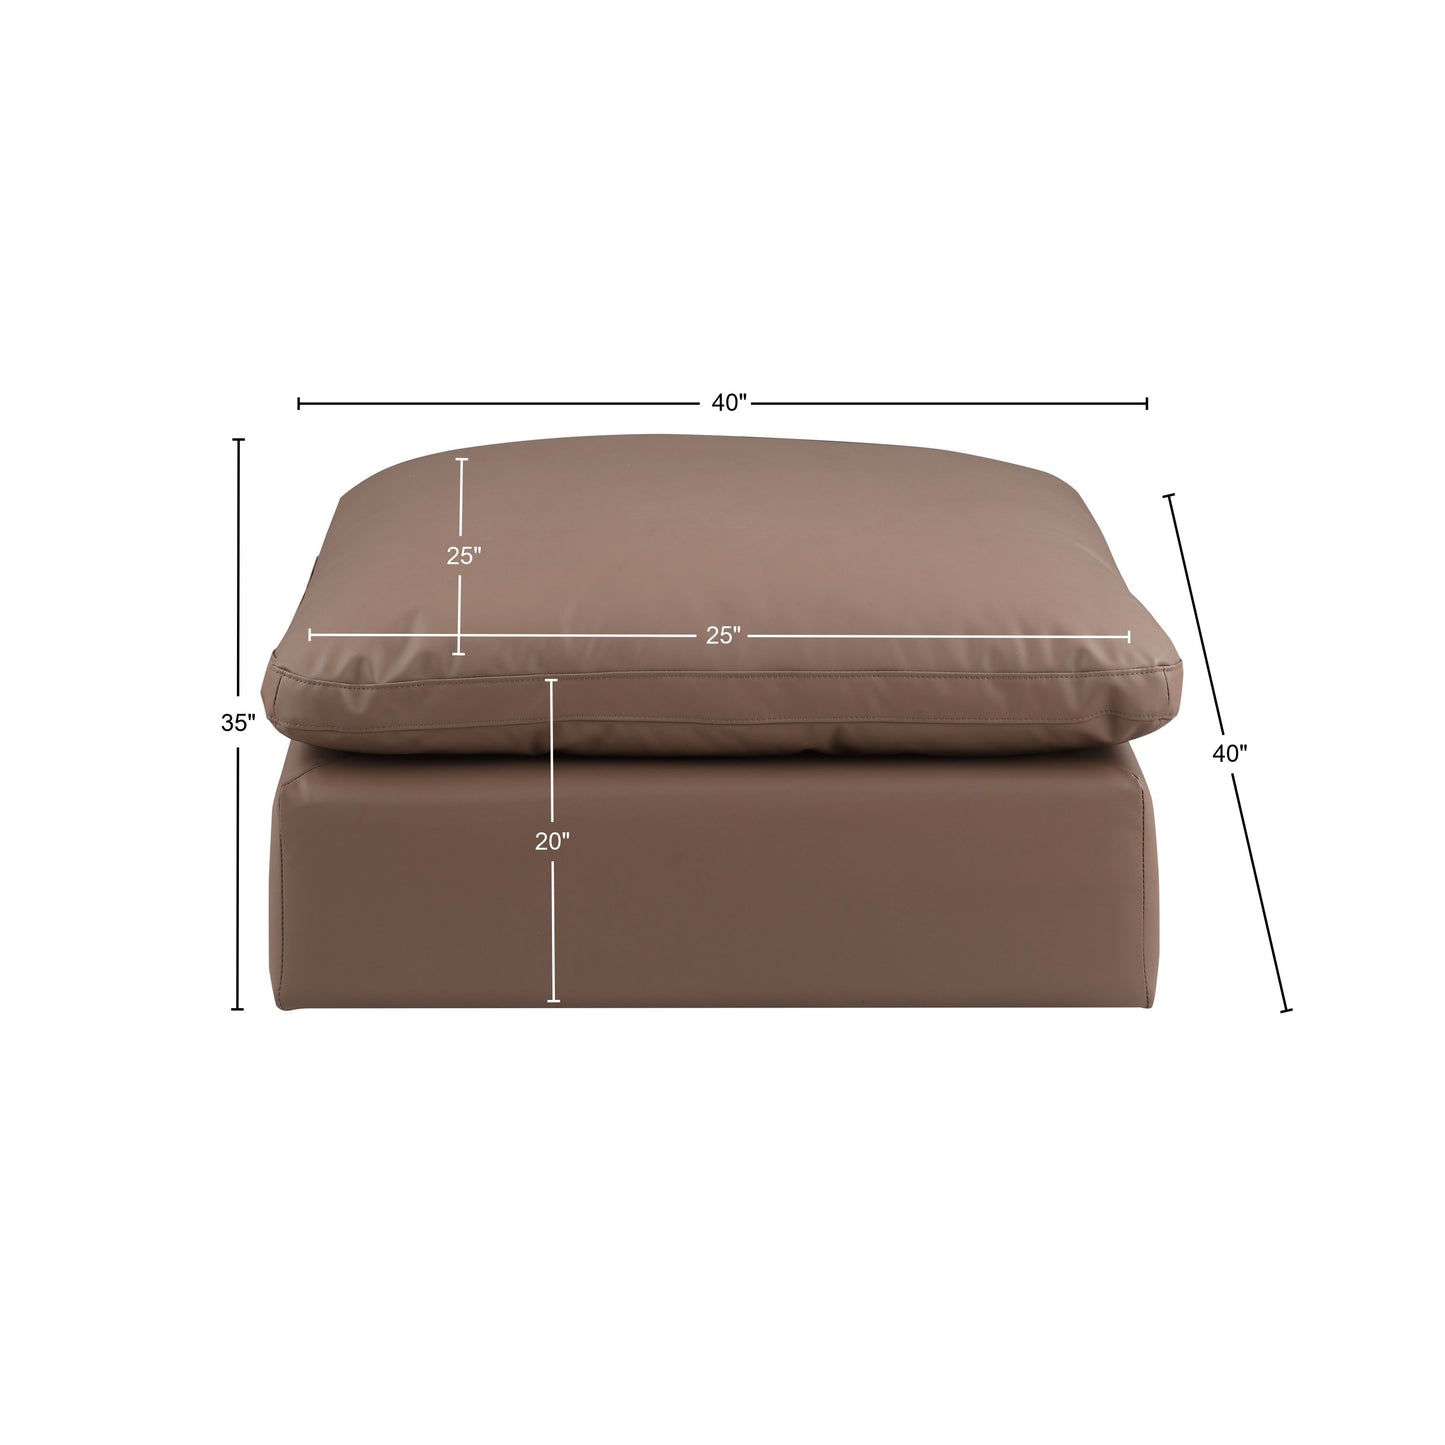 dolce brown faux leather modular ottoman ott